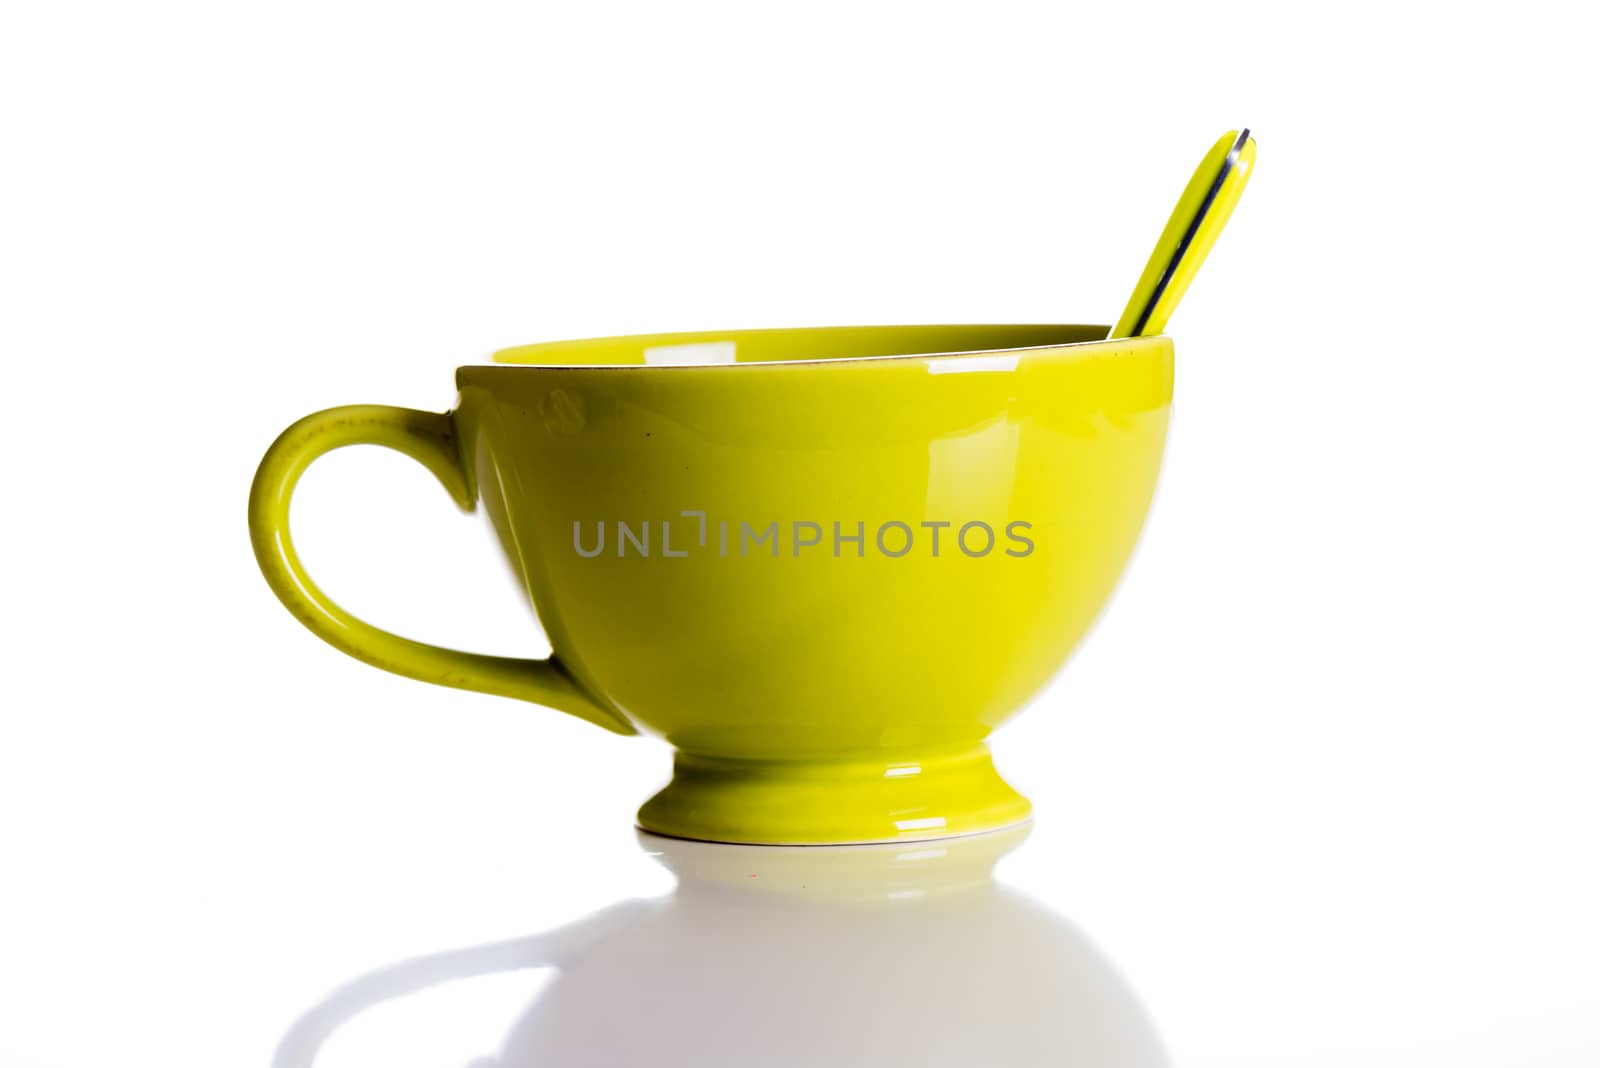 Green jumbo chocolate mug with spoon isolated on white background